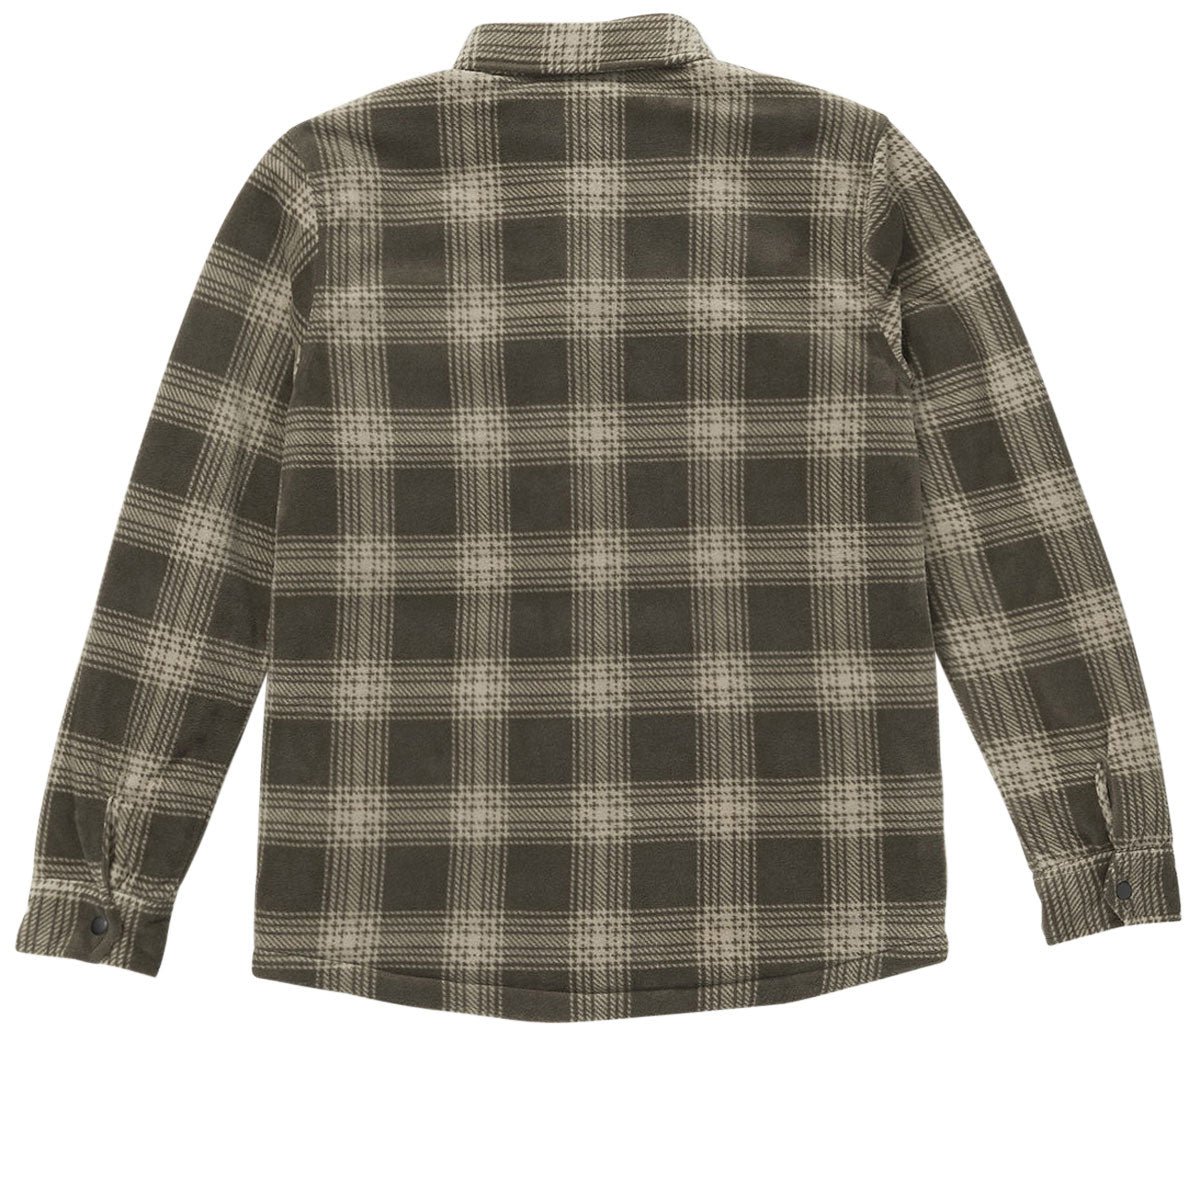 Volcom Bowered Fleece Sweatshirt - Wren image 3